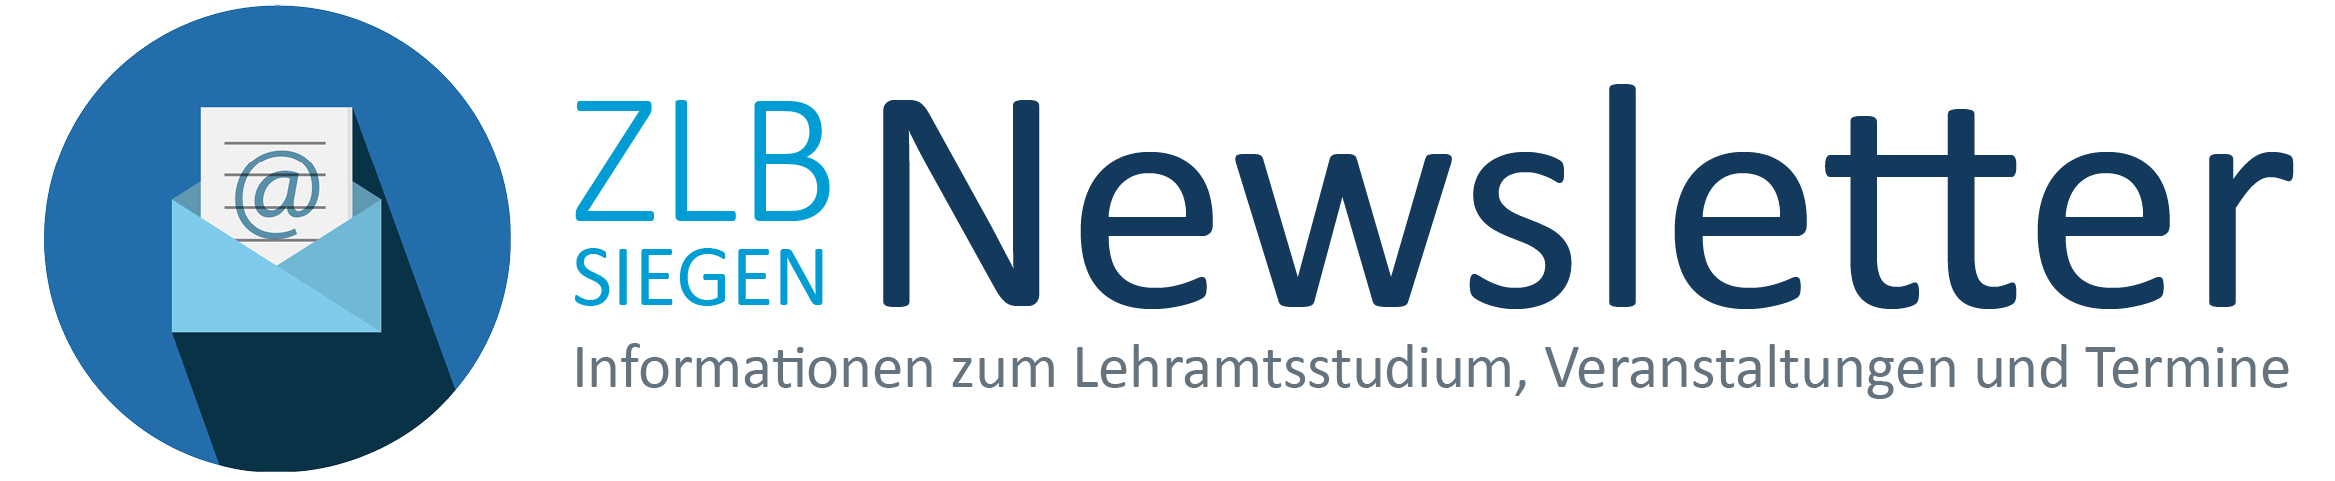 ZLB-Siegen-Newsletter